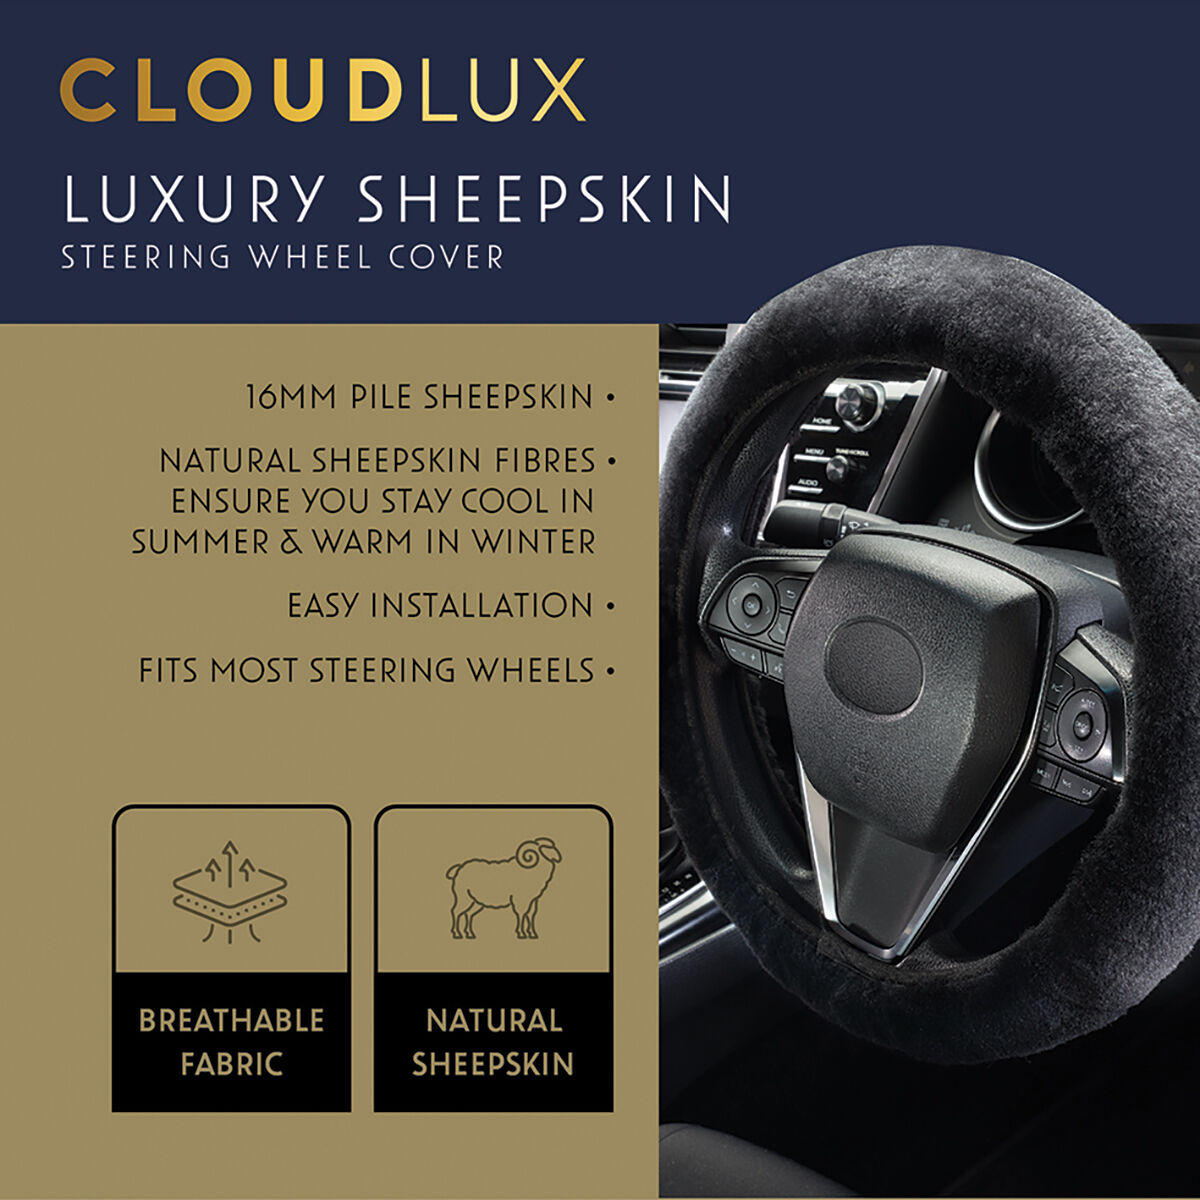 CLOUDLUX Steering Wheel Cover - Sheepskin, Black, 380mm diameter